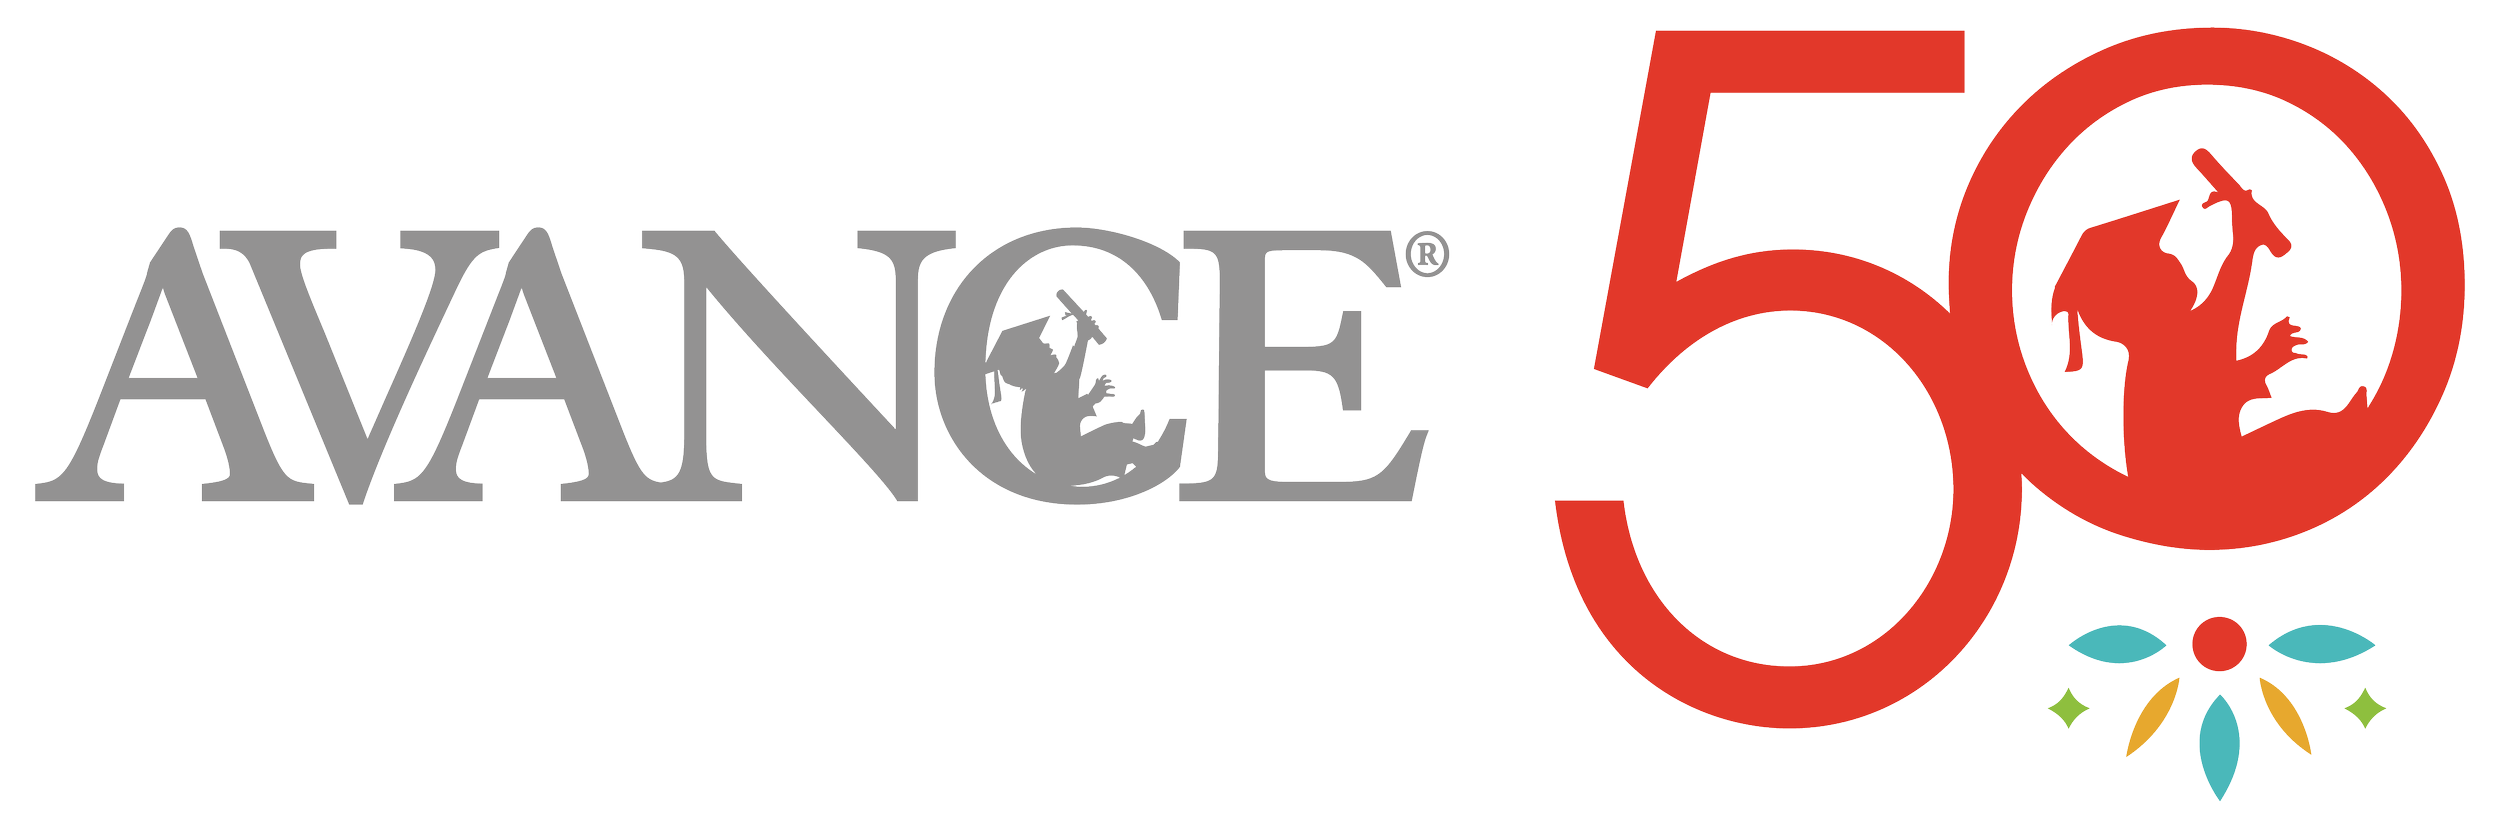 AVANCE-50th-Logo-Horizontal.png